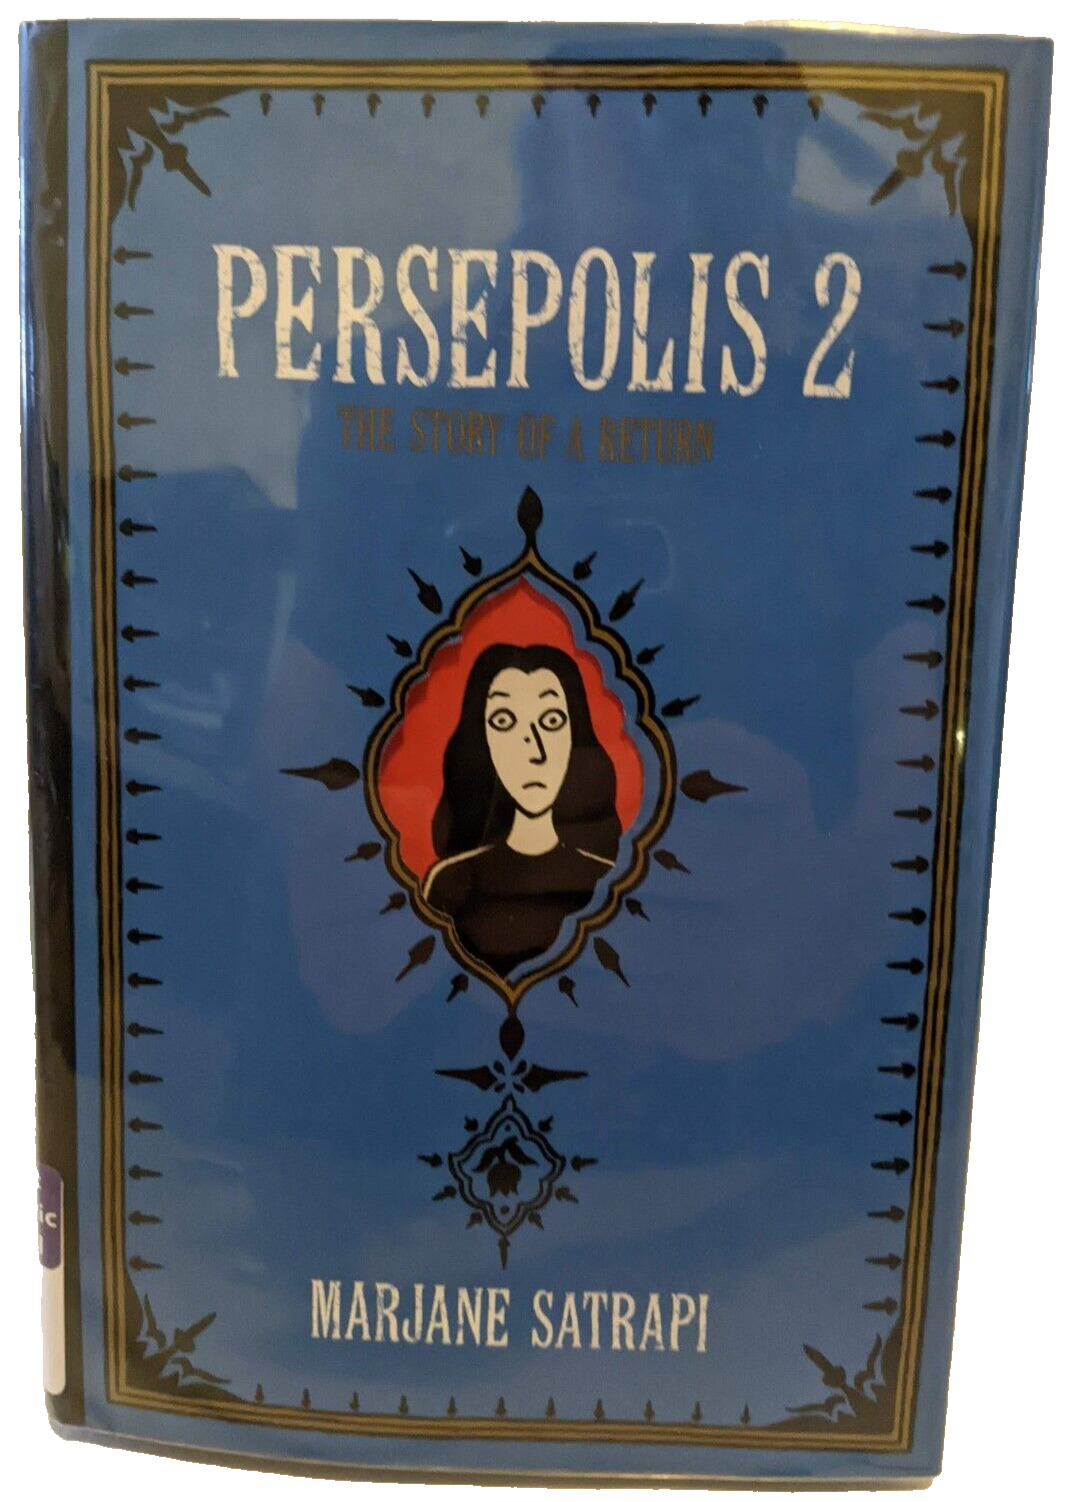 Persepolis 2 Story Return Memoirs Biography History Iran Autobiography War